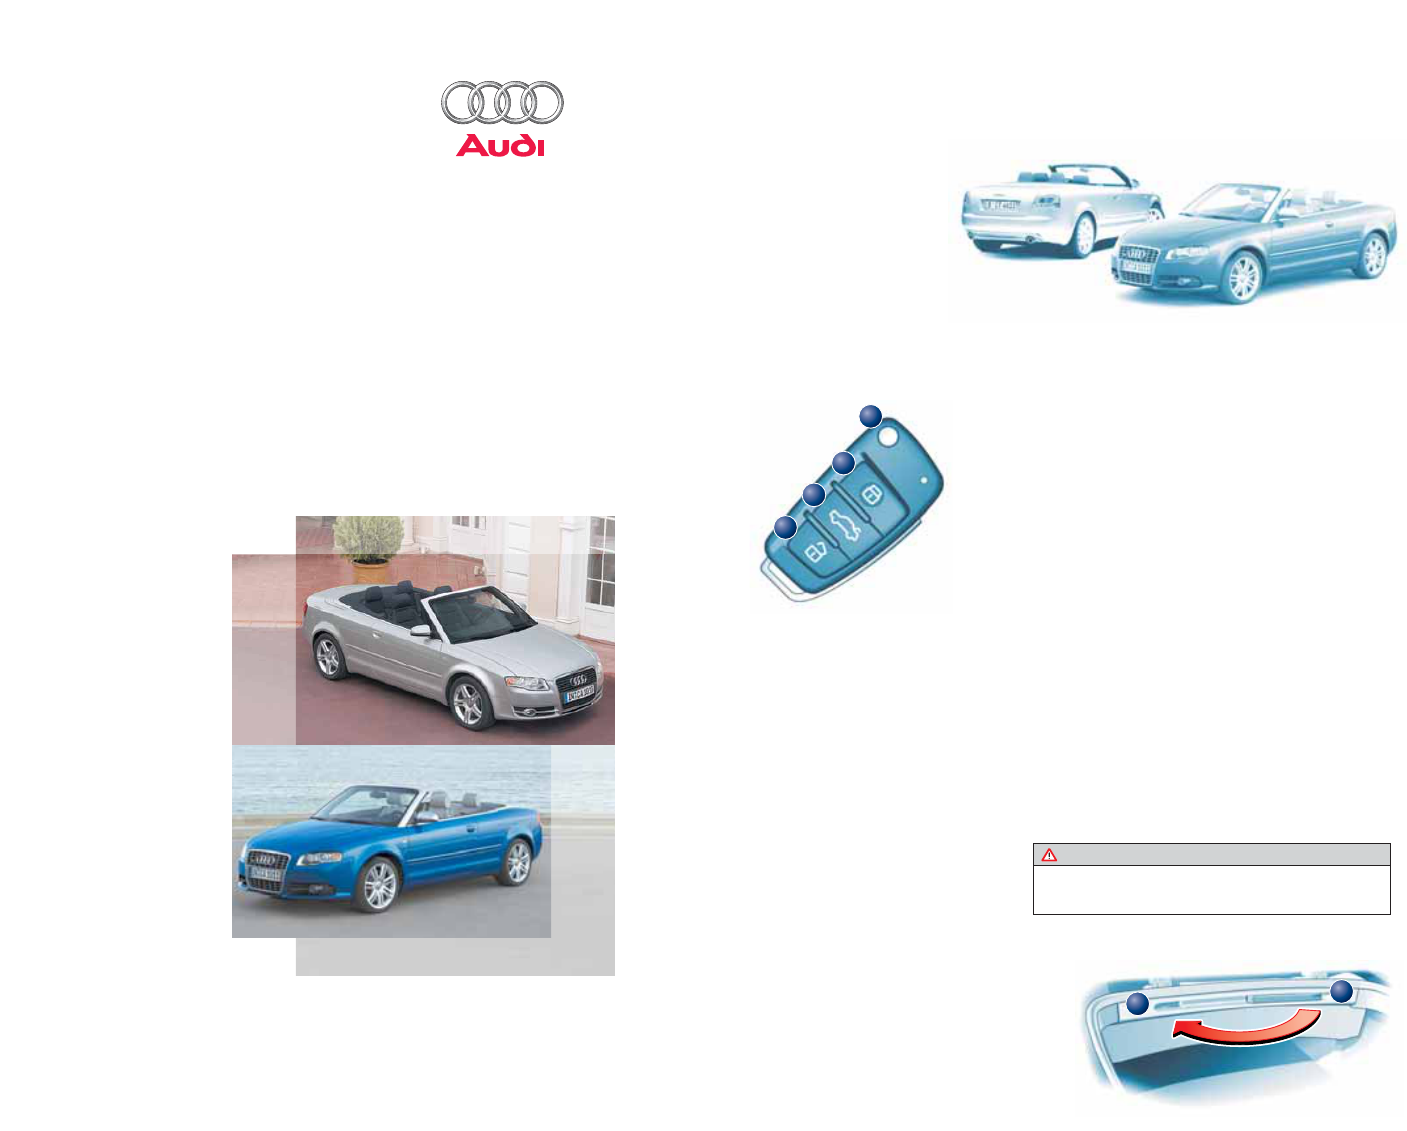 Handleiding Audi A4 Cabriolet (pagina 1 van 6) (Duits)